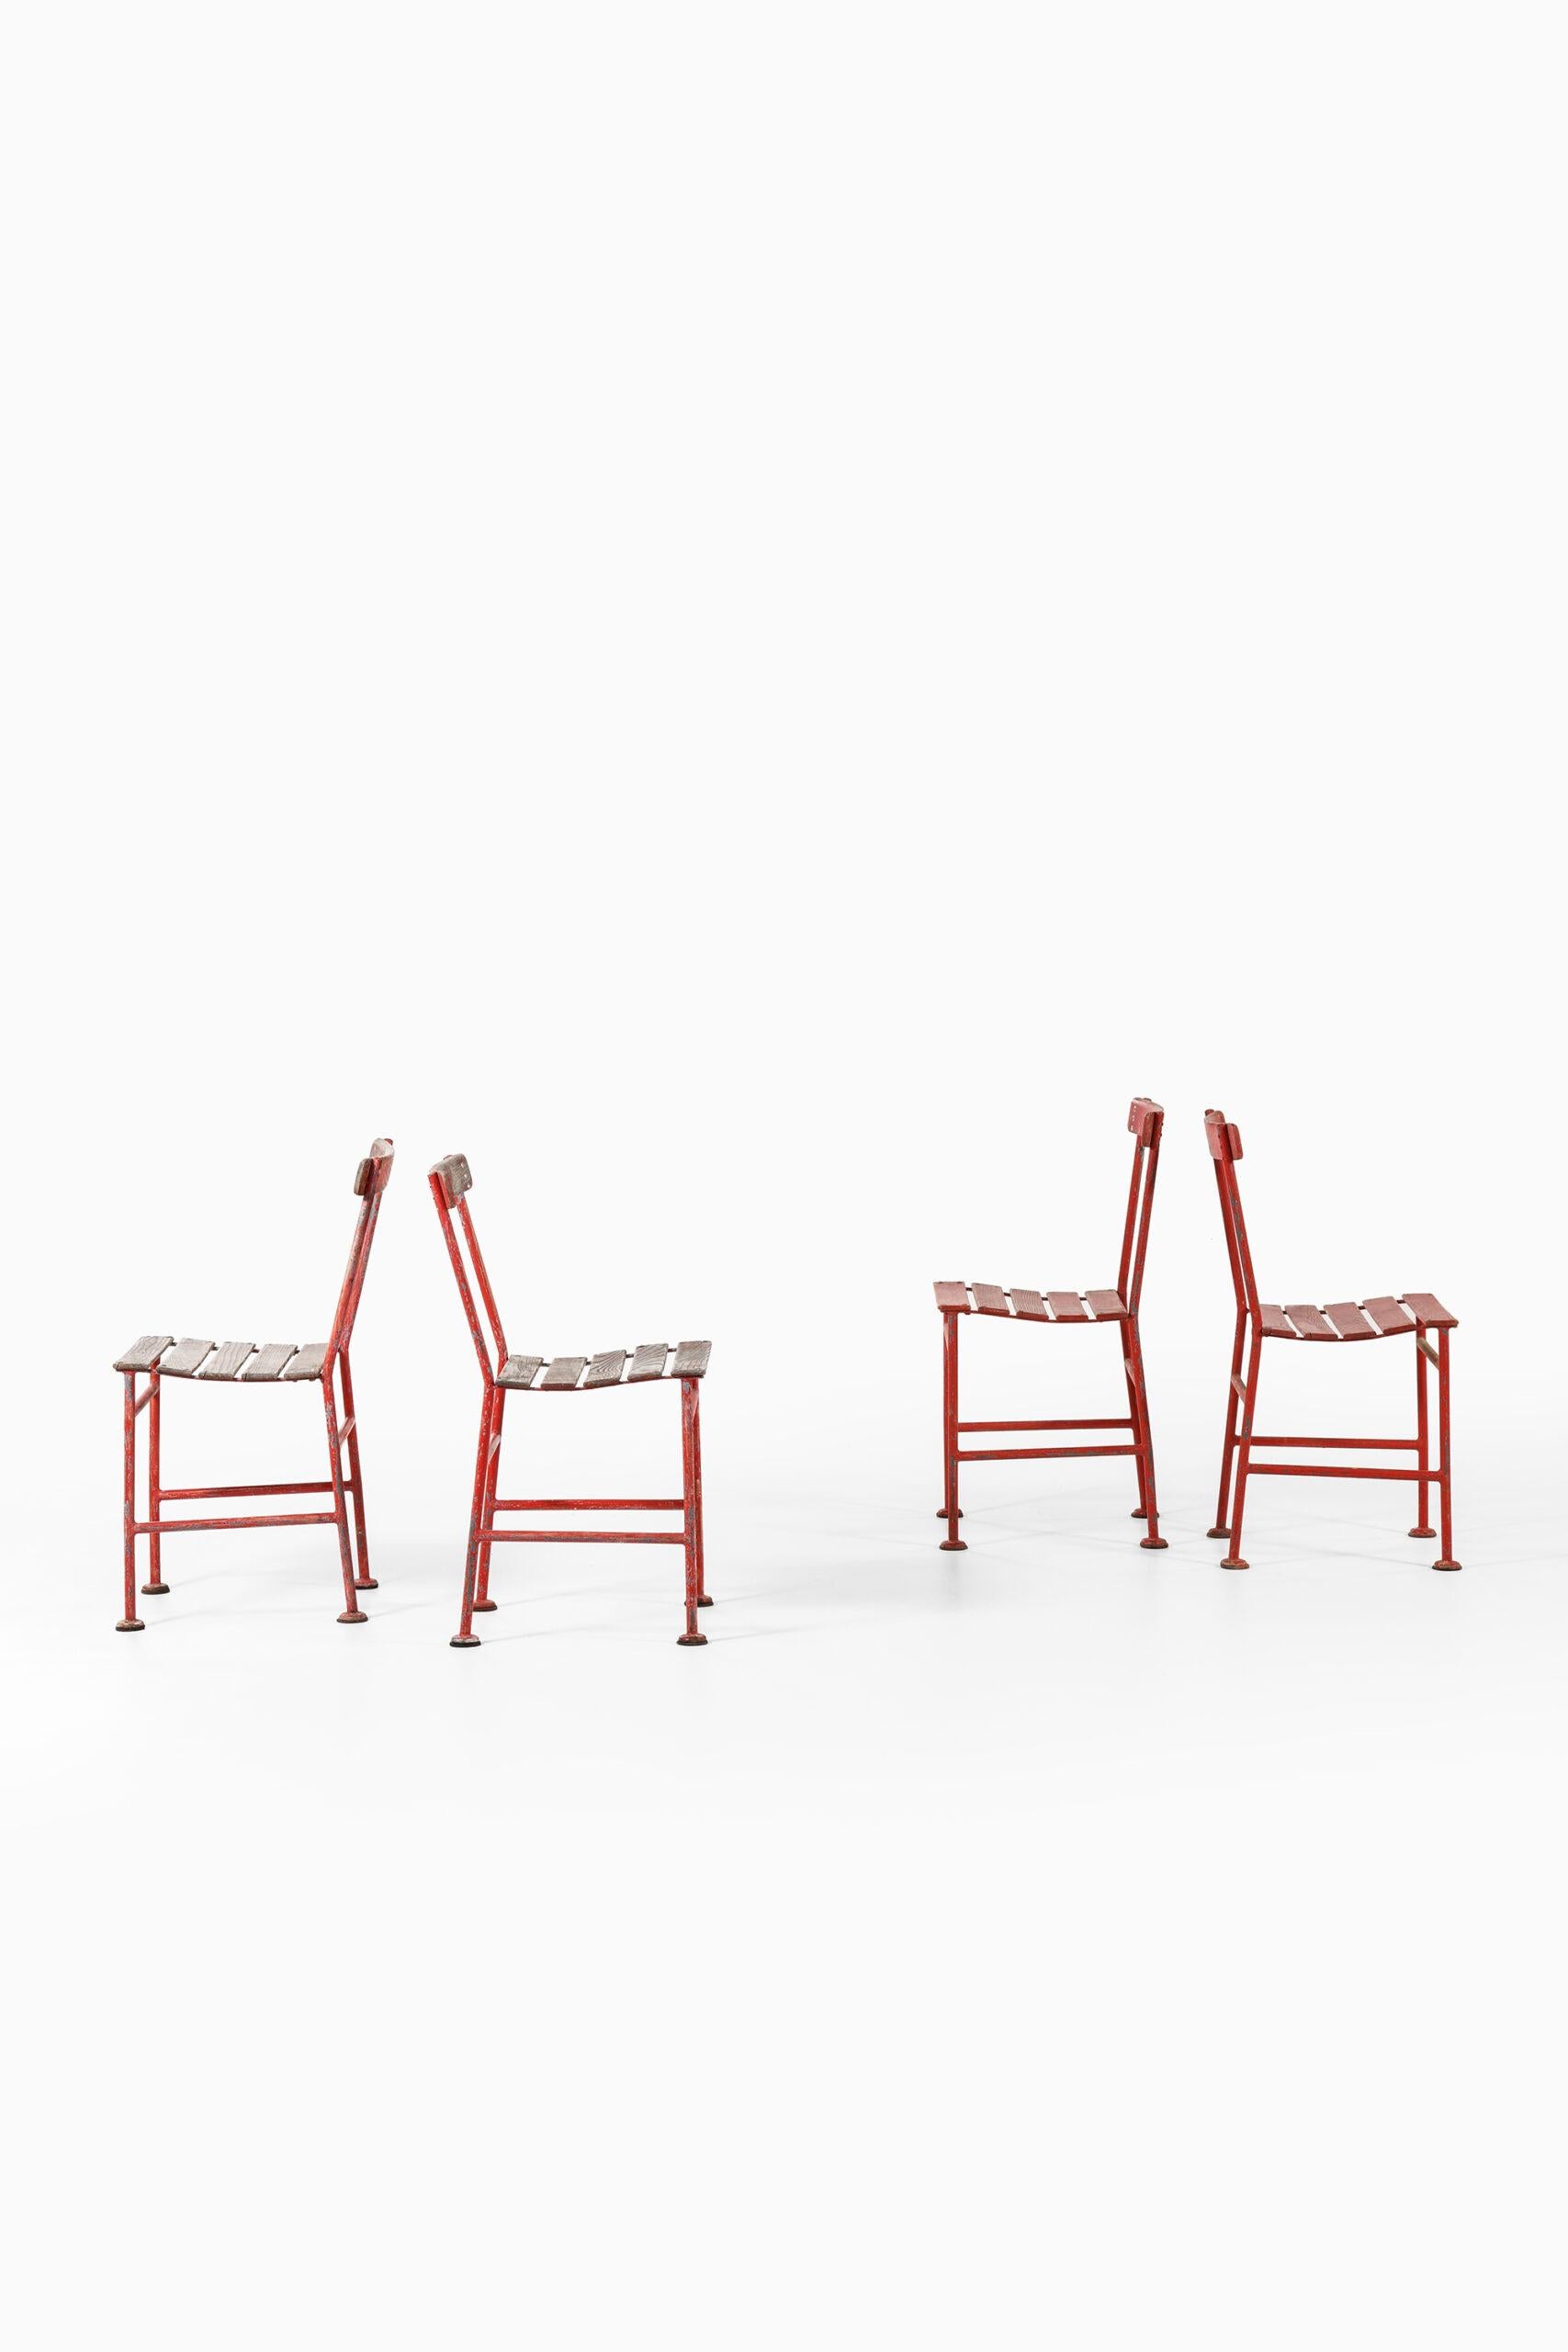 Rare set of 4 chairs designed by Gunnar Asplund. Produced by Iwan B. Giertz in Flen, Sweden.